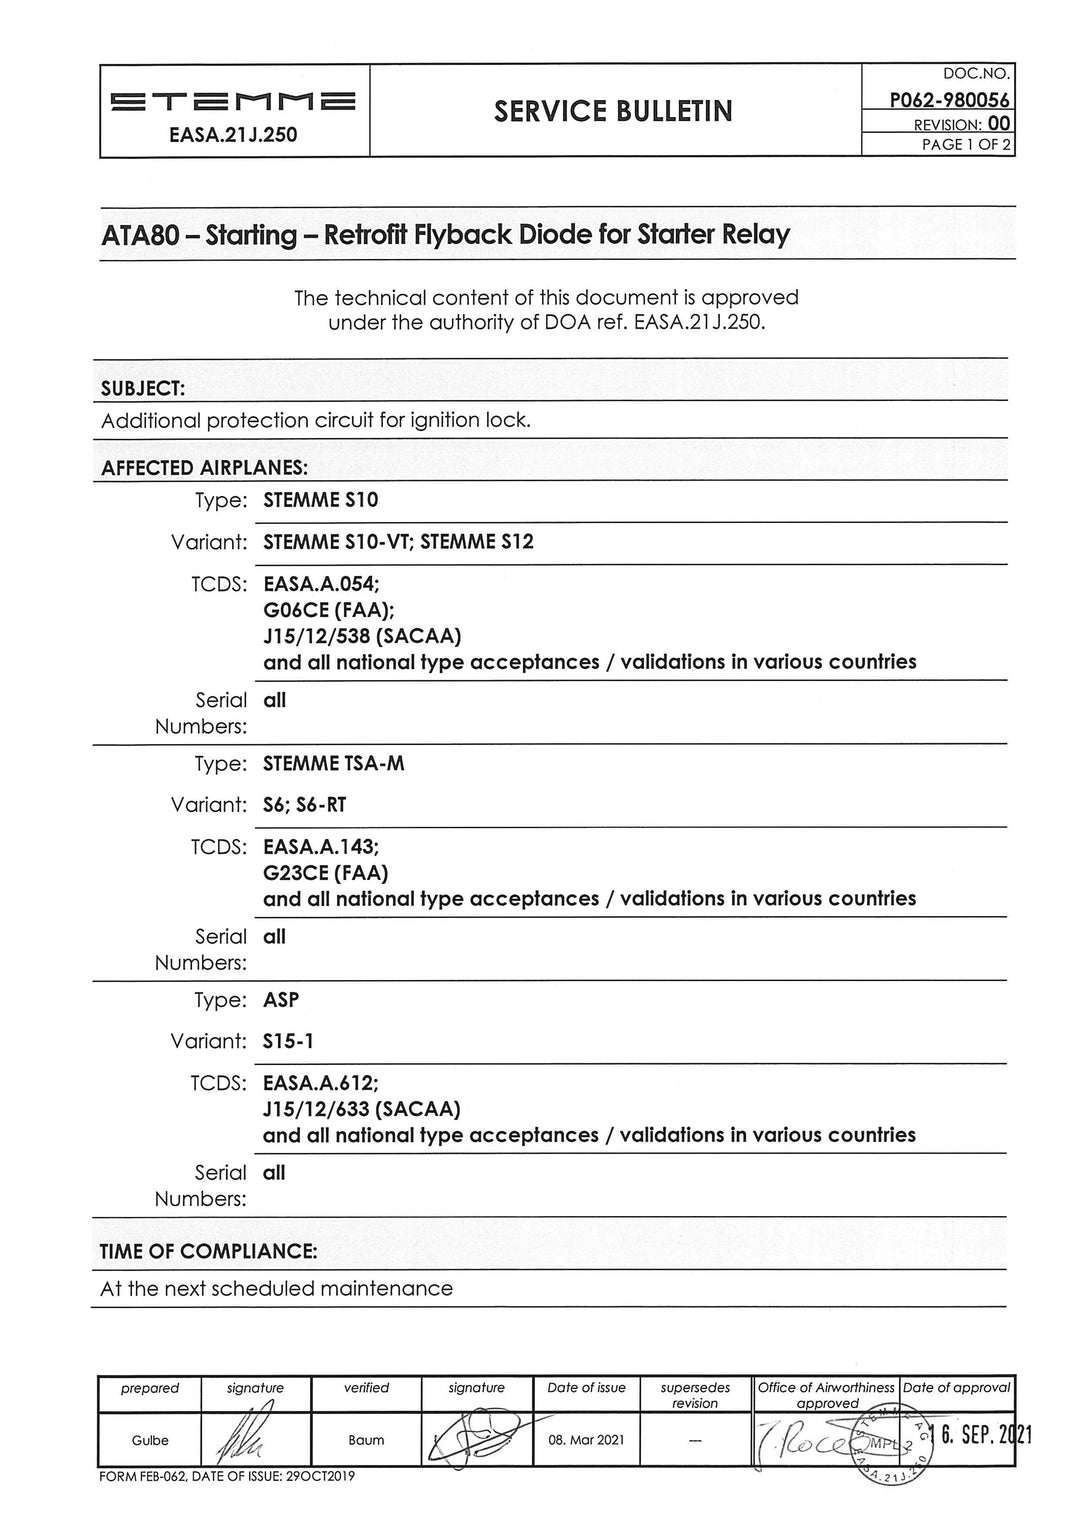 S10/12 Service Bulletin Diode Retrofit